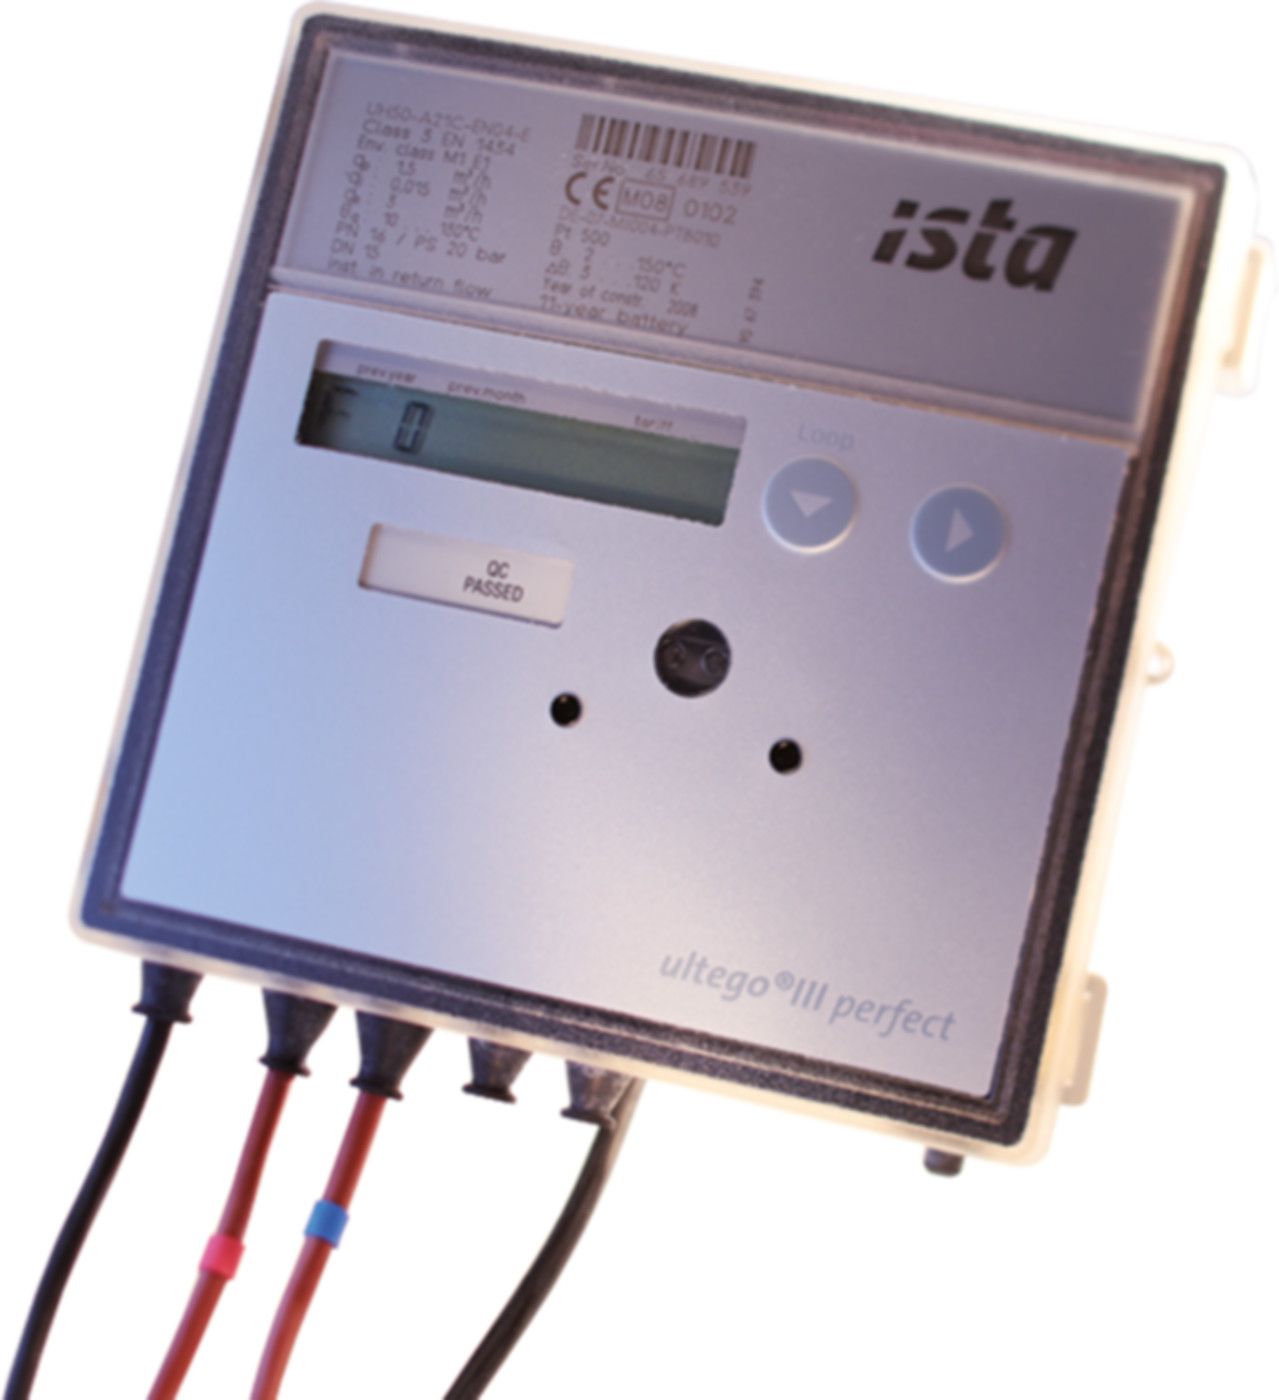 Ultraschall Wärmezähler ultego III perf. 40.0 m3/h DN 80 L=300 mm Batterie - ISTA - Wärme- / Wasserzähler